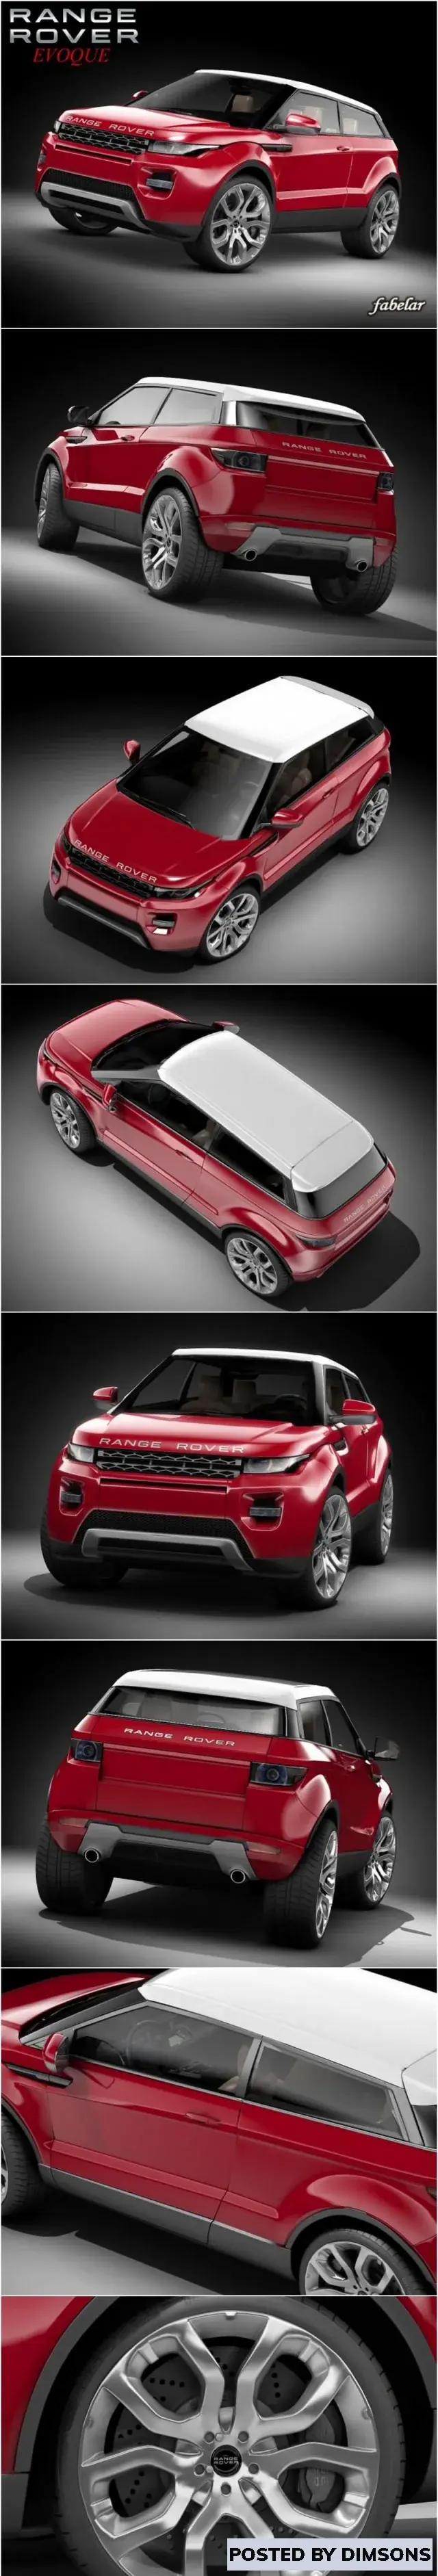 Vehicles, cars Range Rover Evoque  - 3D Model